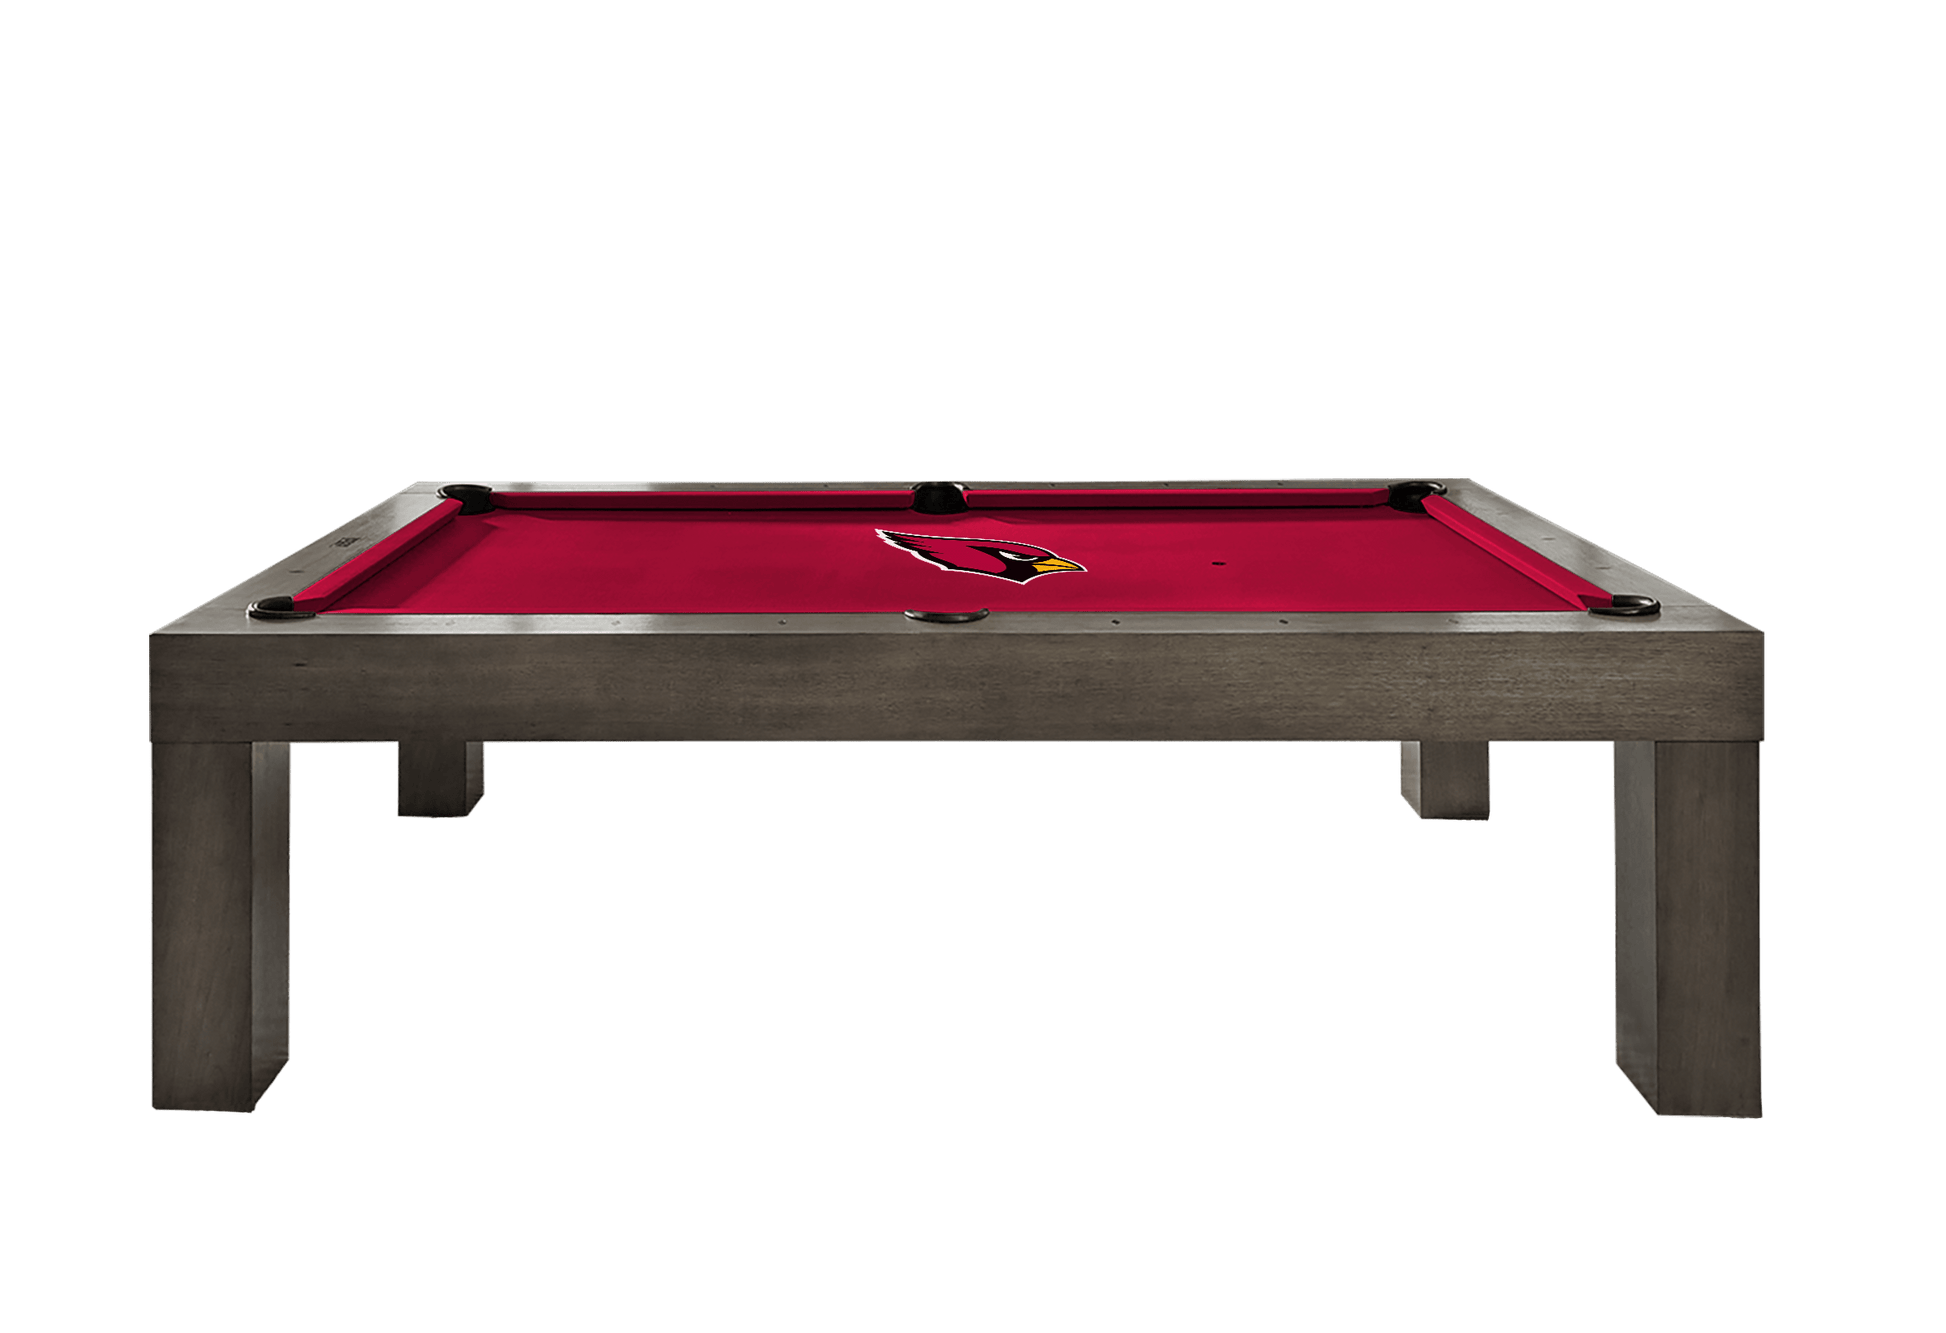 Arizona Cardinals Premium Pool Table Bundle - Charcoal Pool Bundle Home Arcade Games   